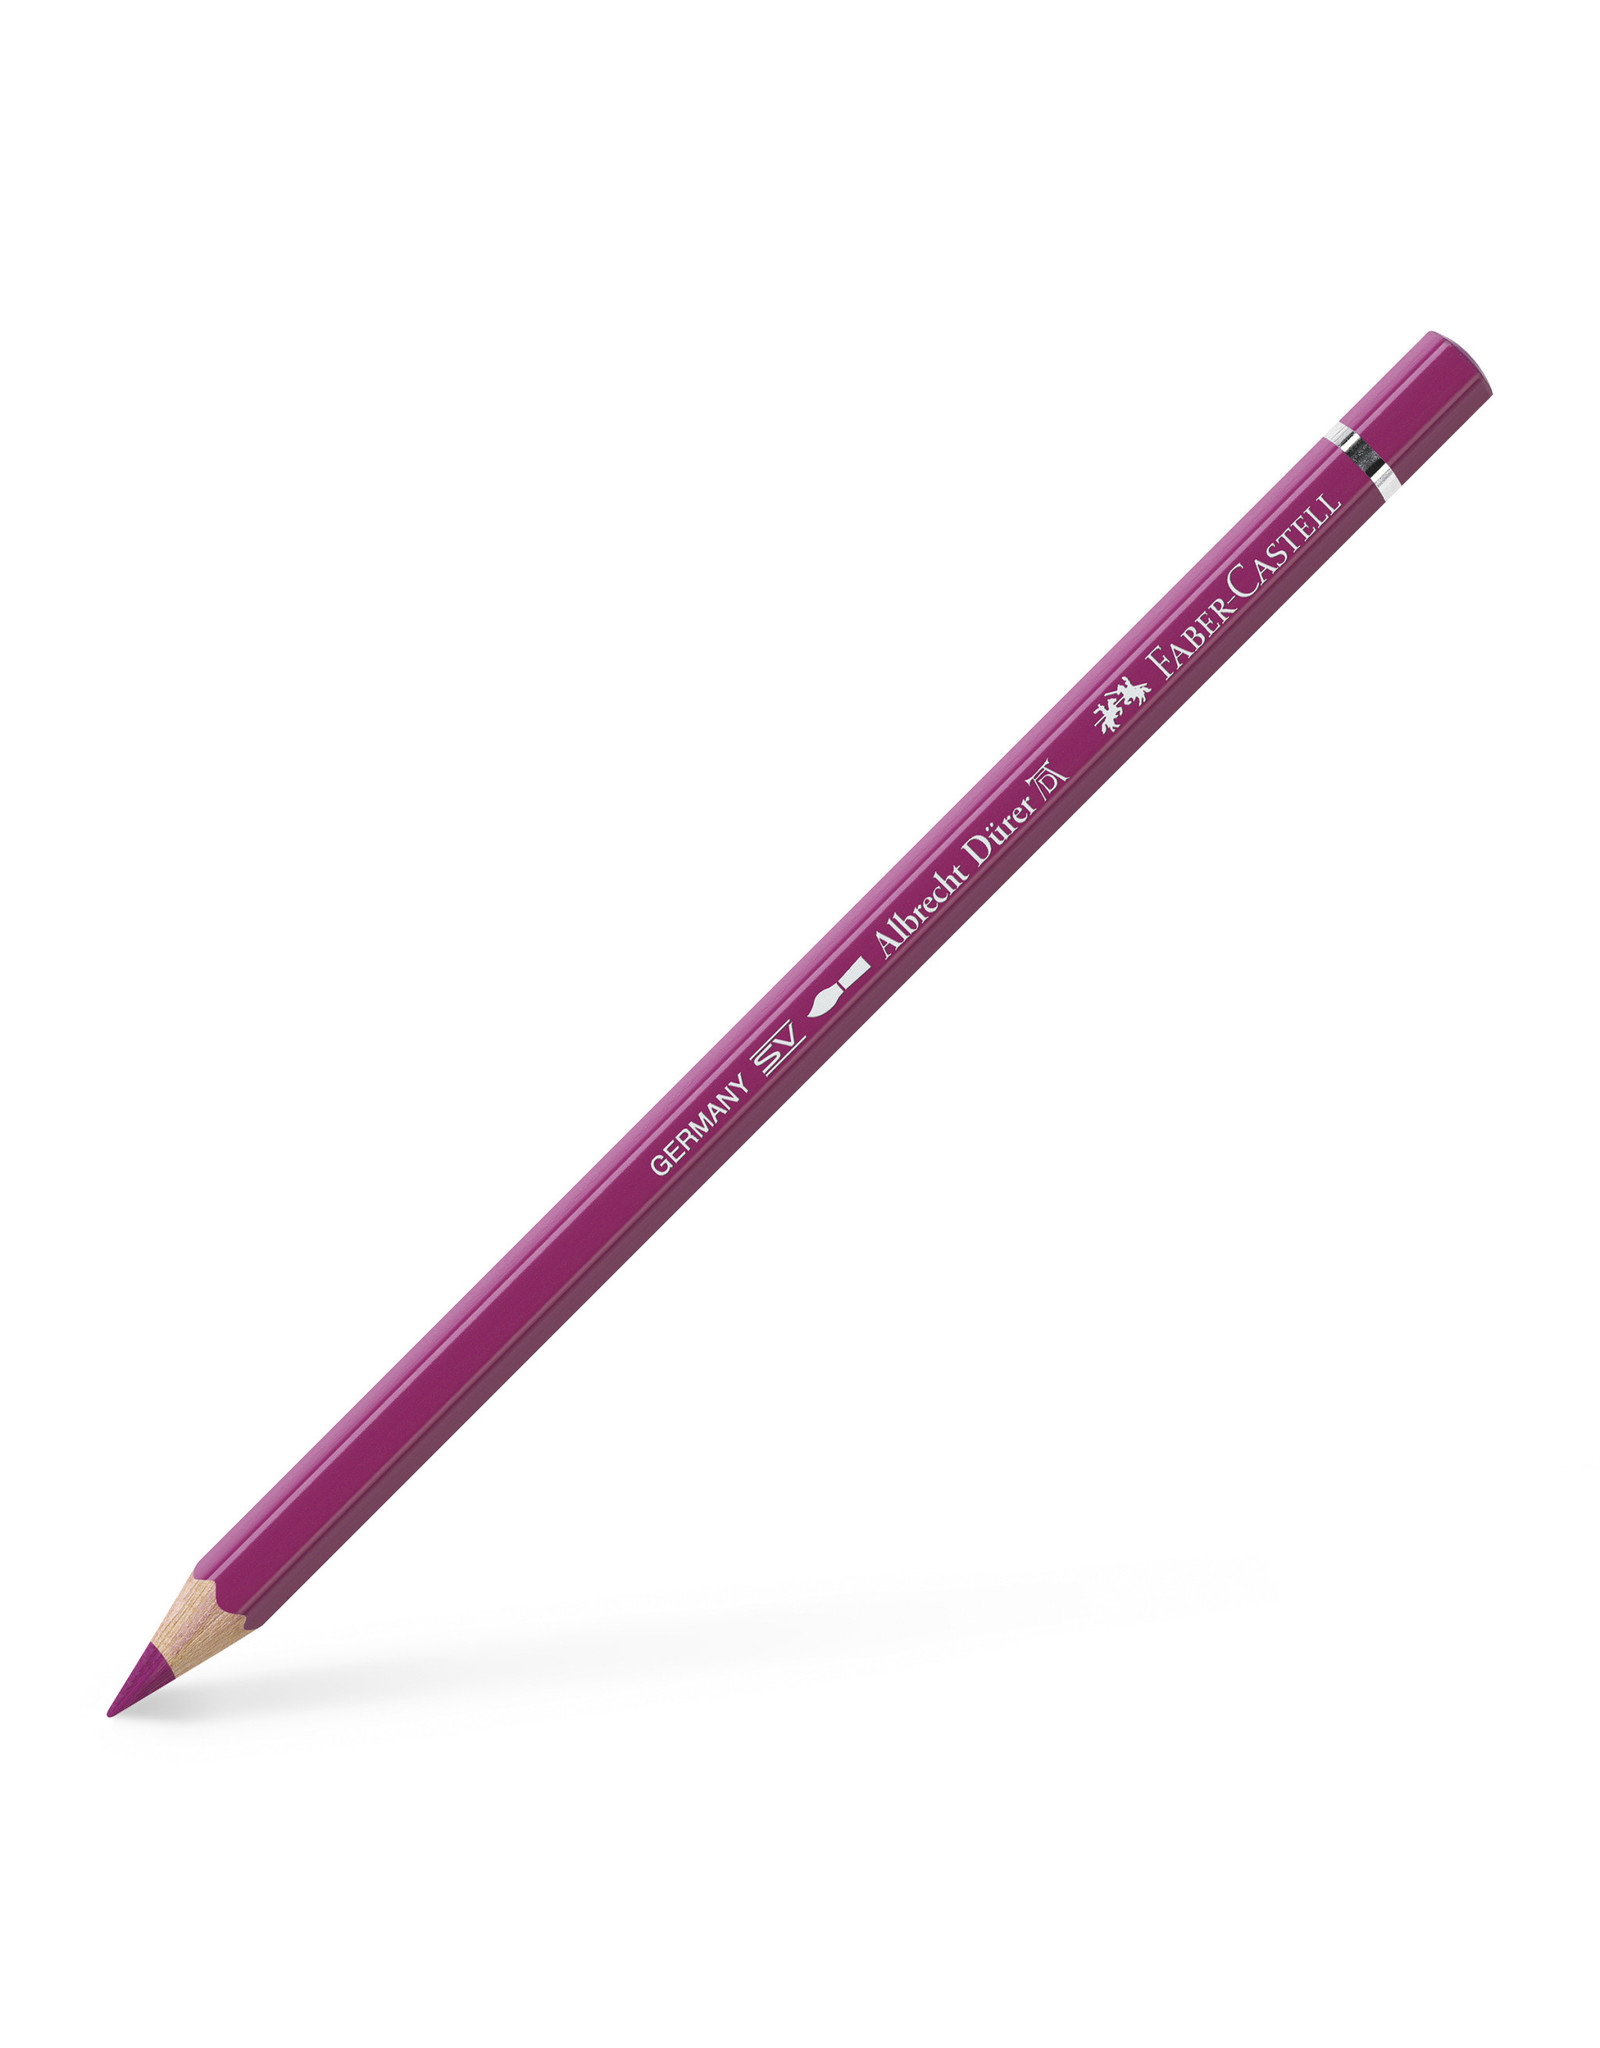 FABER-CASTELL Albrecht Durer Watercolor Pencil, Middle Purple Pink